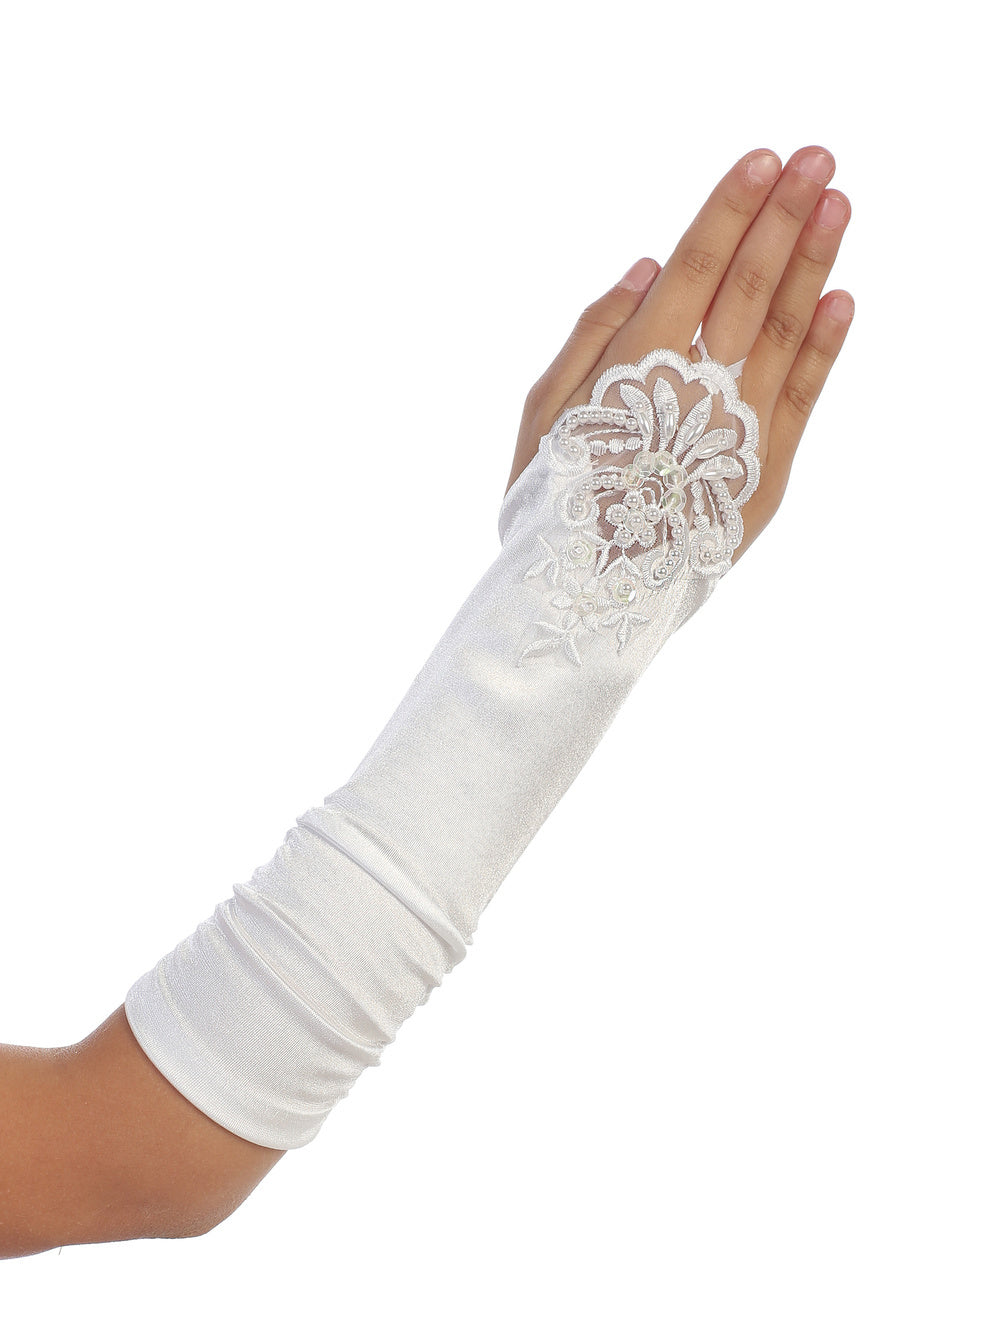 Girls Below Elbow Length Lace Fingerless Gloves